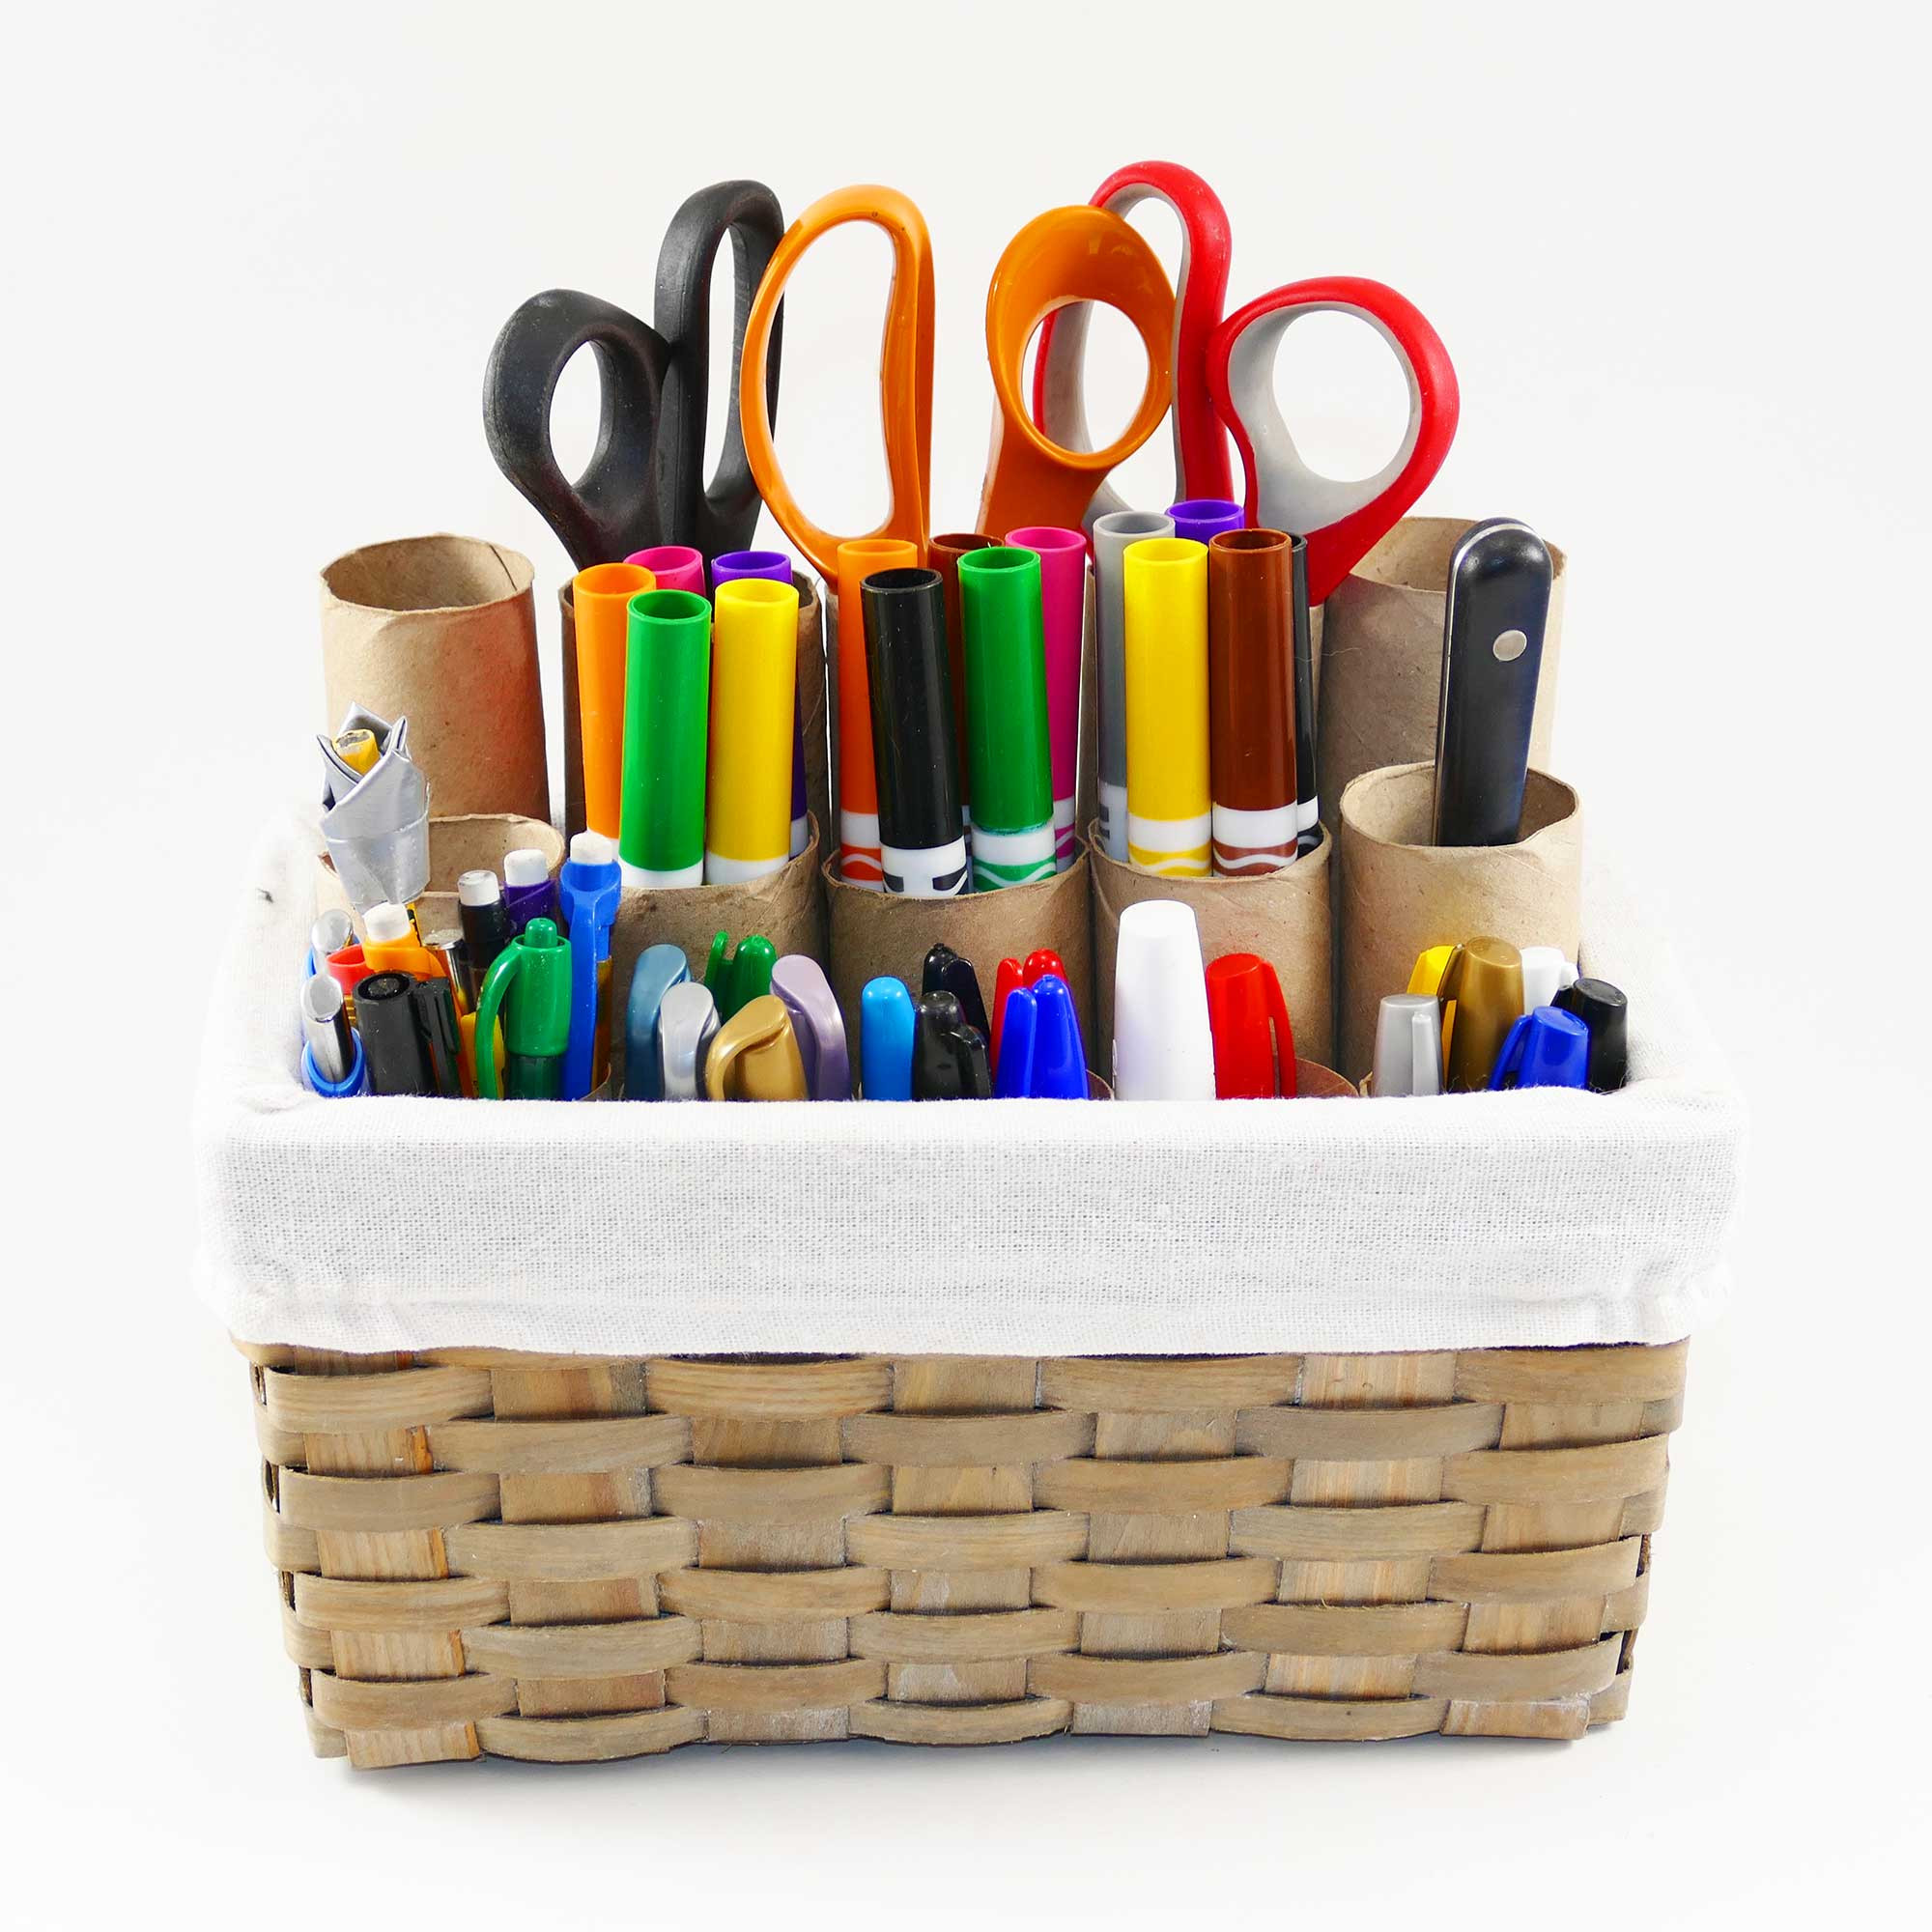 Best ideas about DIY Crafts Organizer
. Save or Pin DIY Craft Organizer in 5 Minutes Jennifer Maker Now.